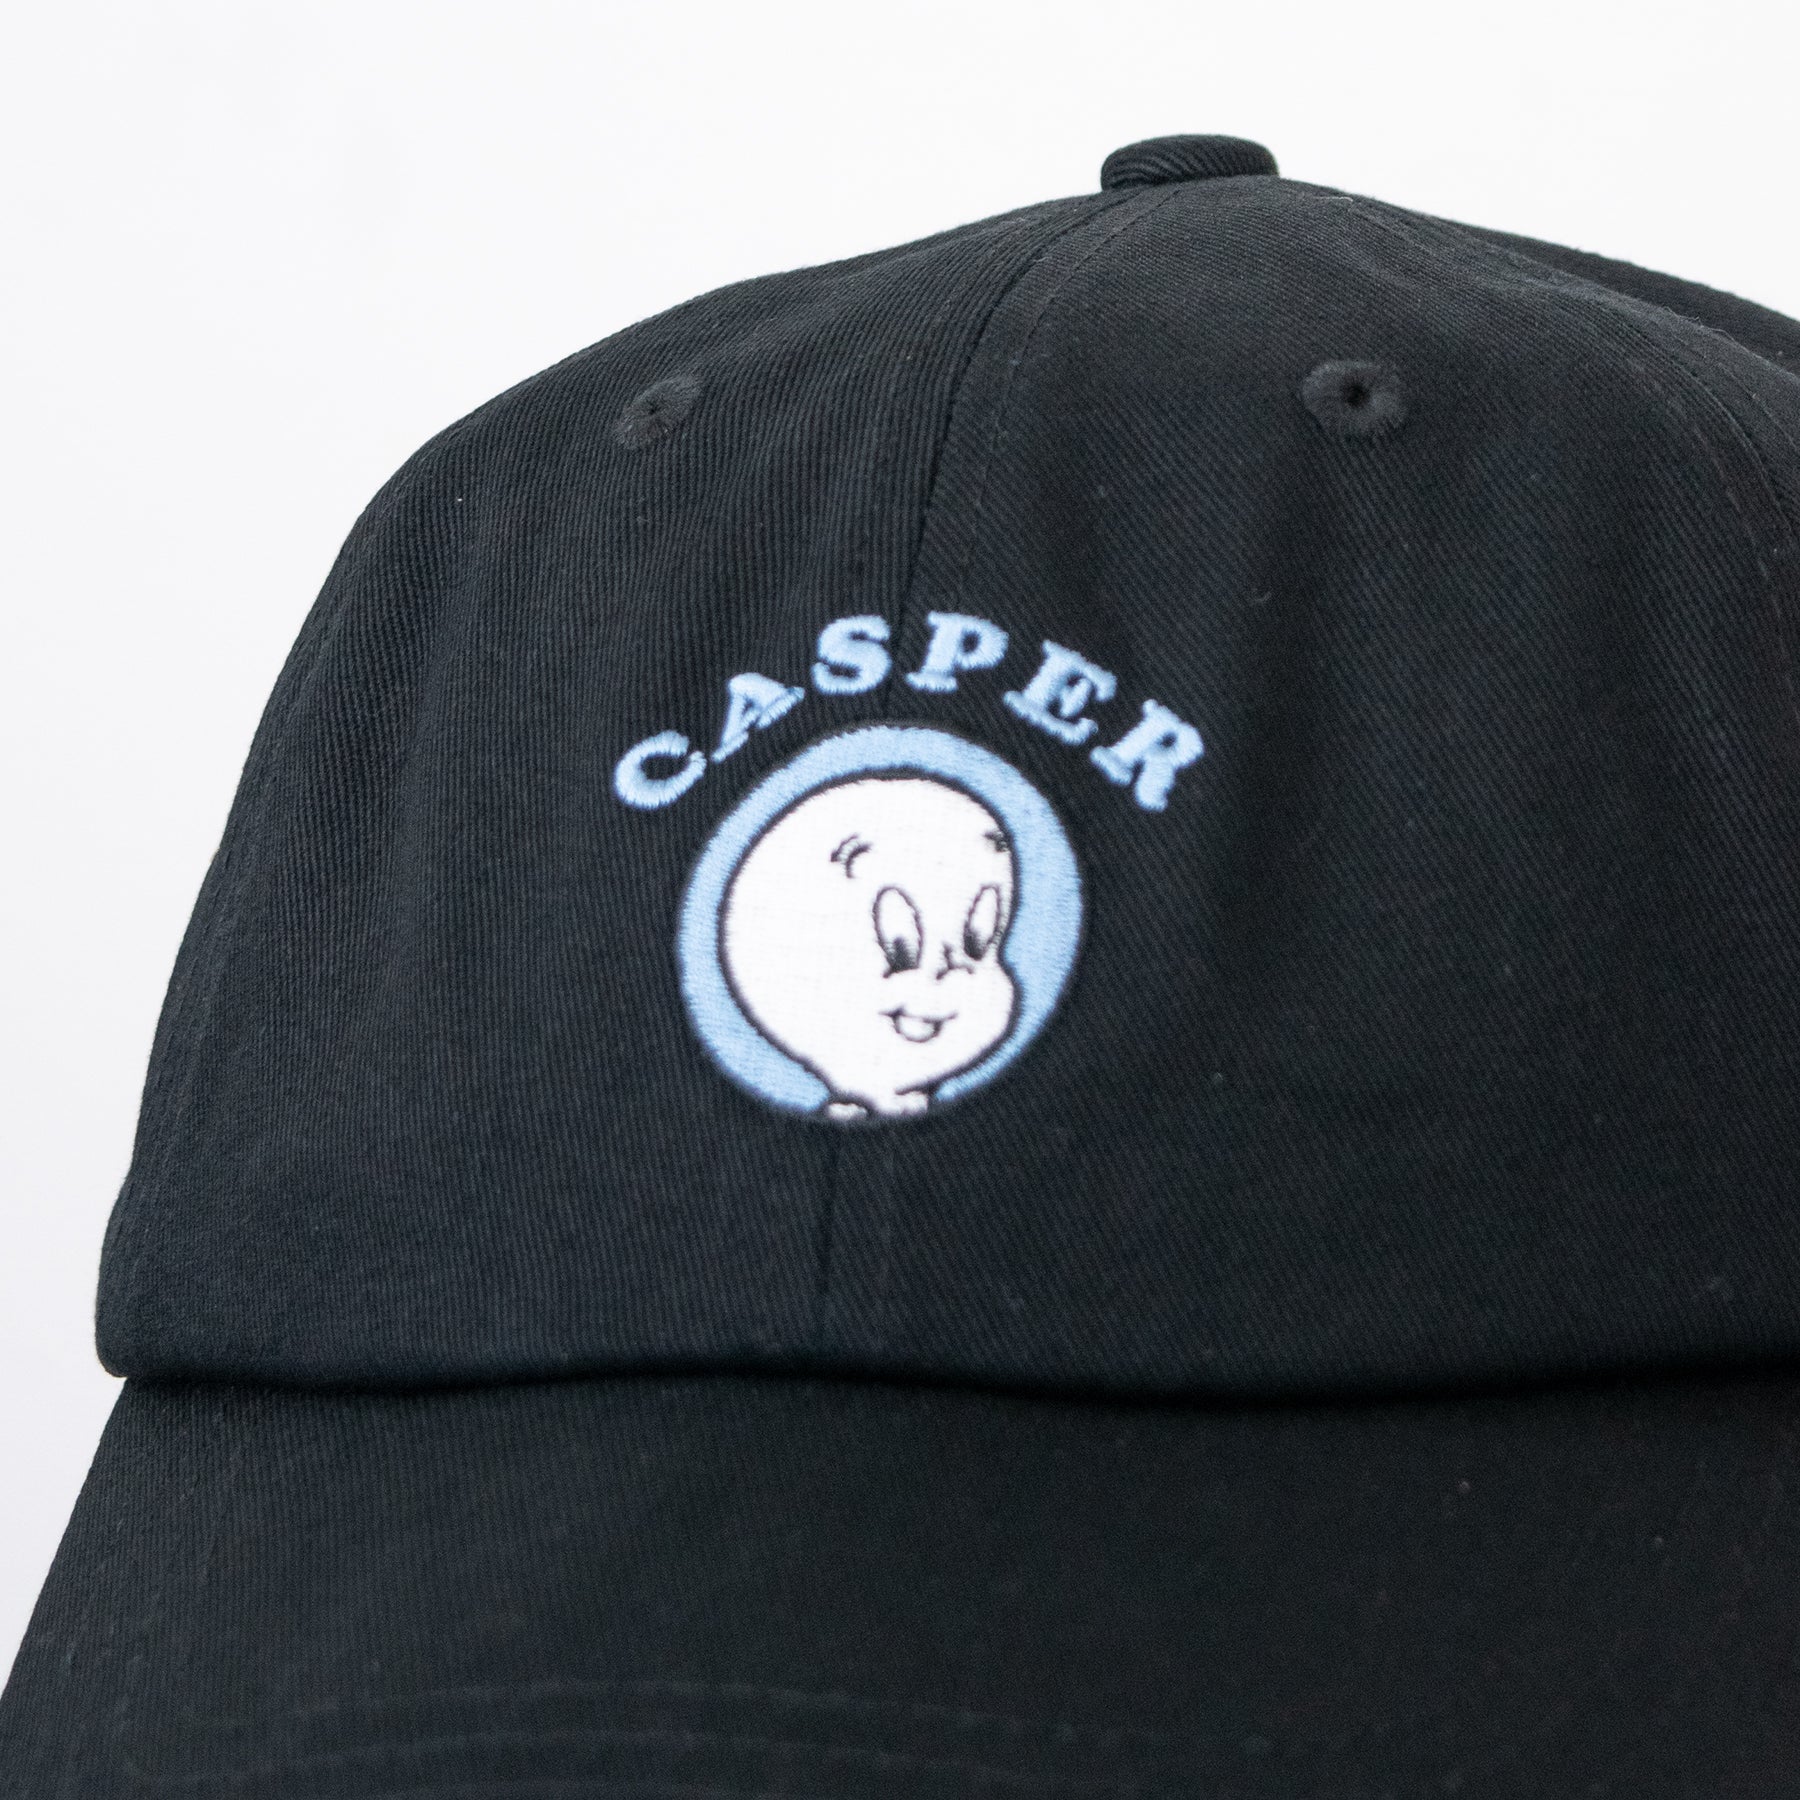 Casper Casper Embroidery Cap - YOUAREMYPOISON